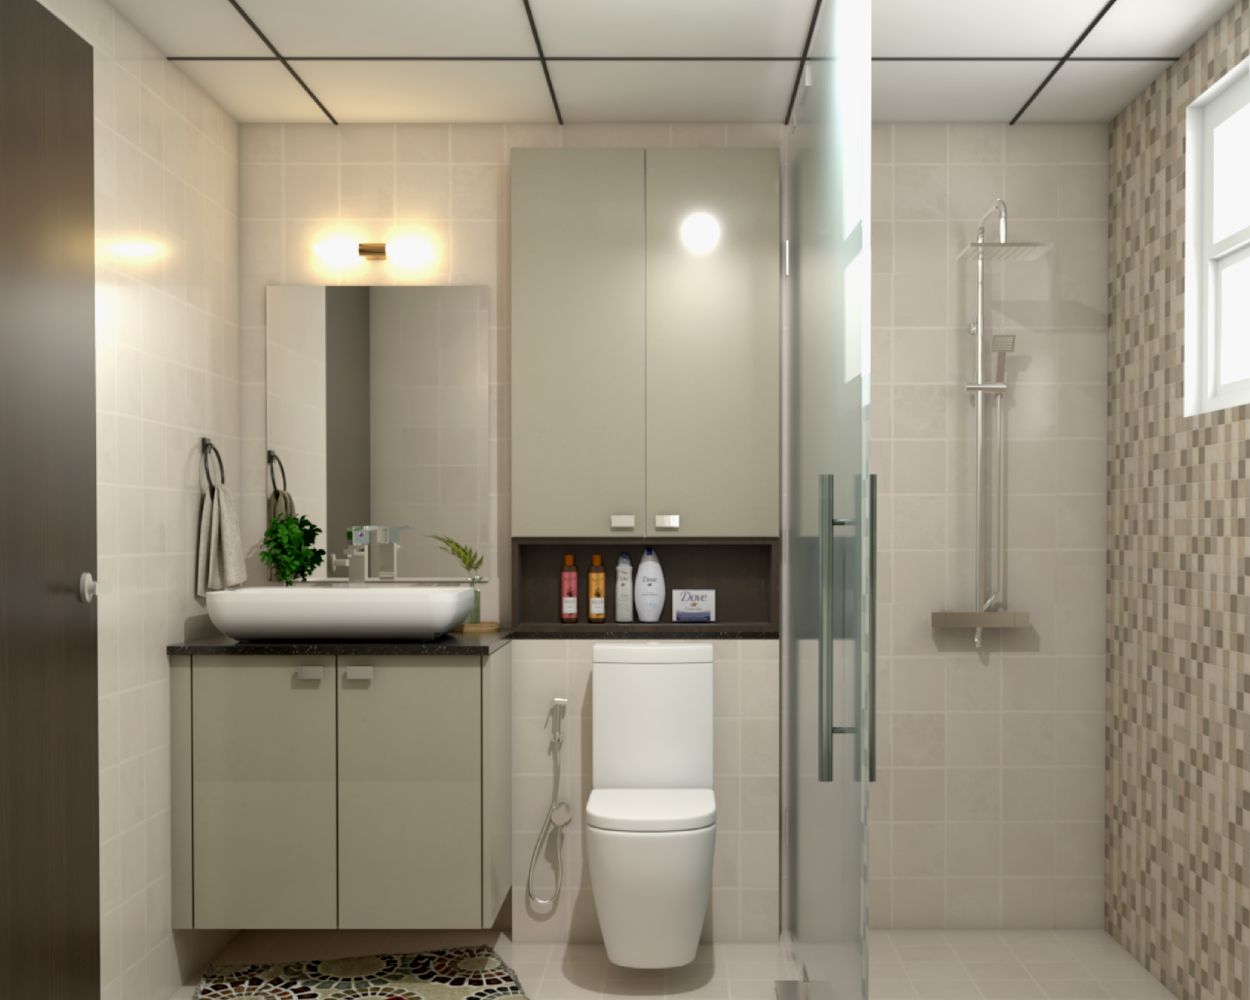 Modern Cream And Multicoloured Bathroom Design With Bathroom Cabinet